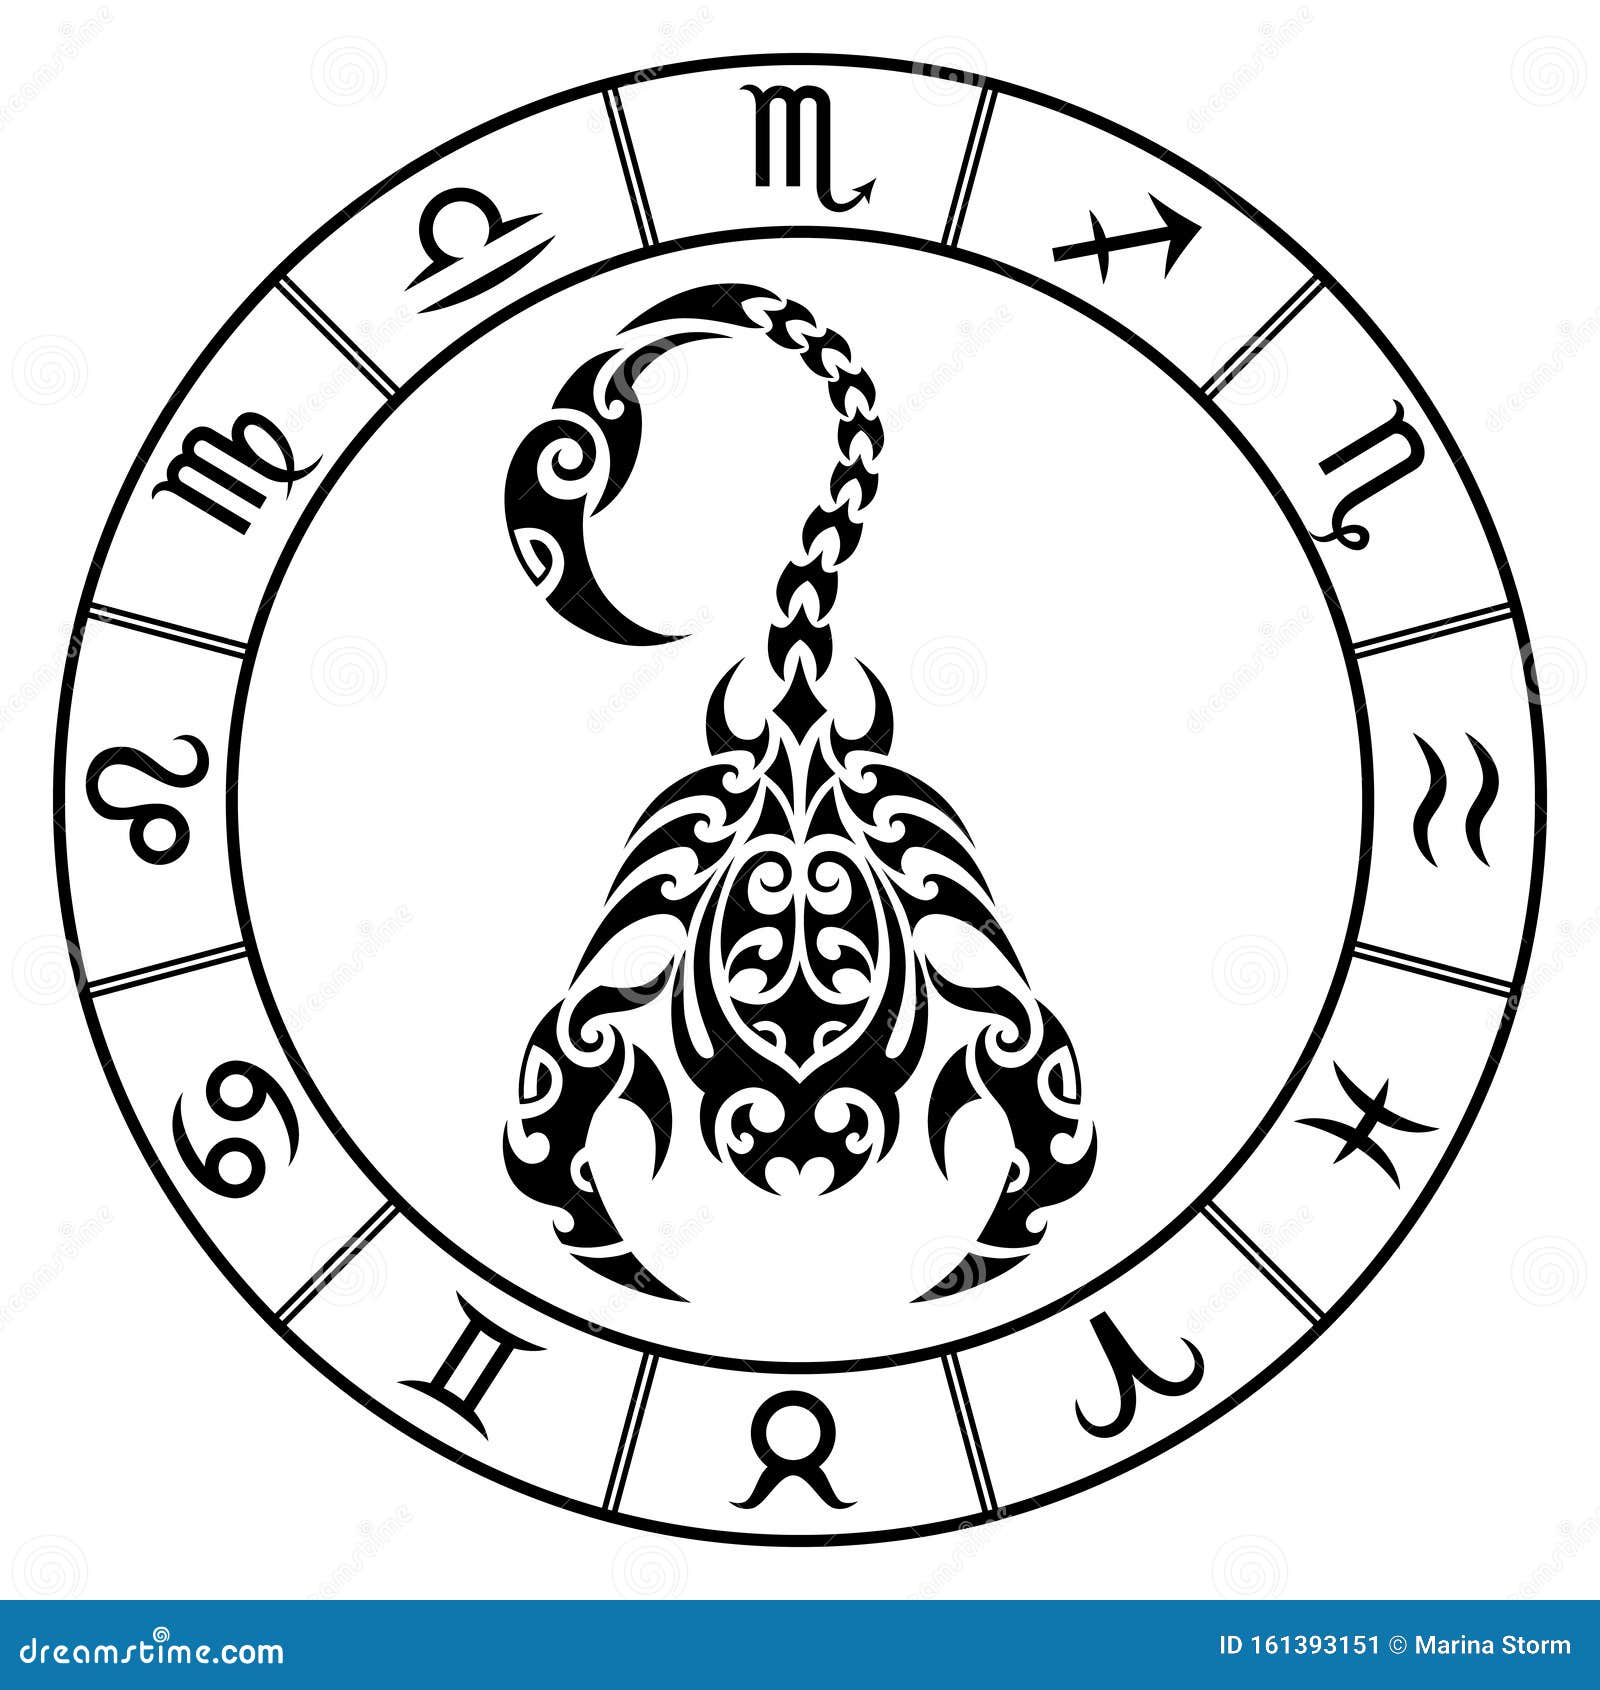 Maori Circle Tattoo Vector Illustration | CartoonDealer.com #61003902